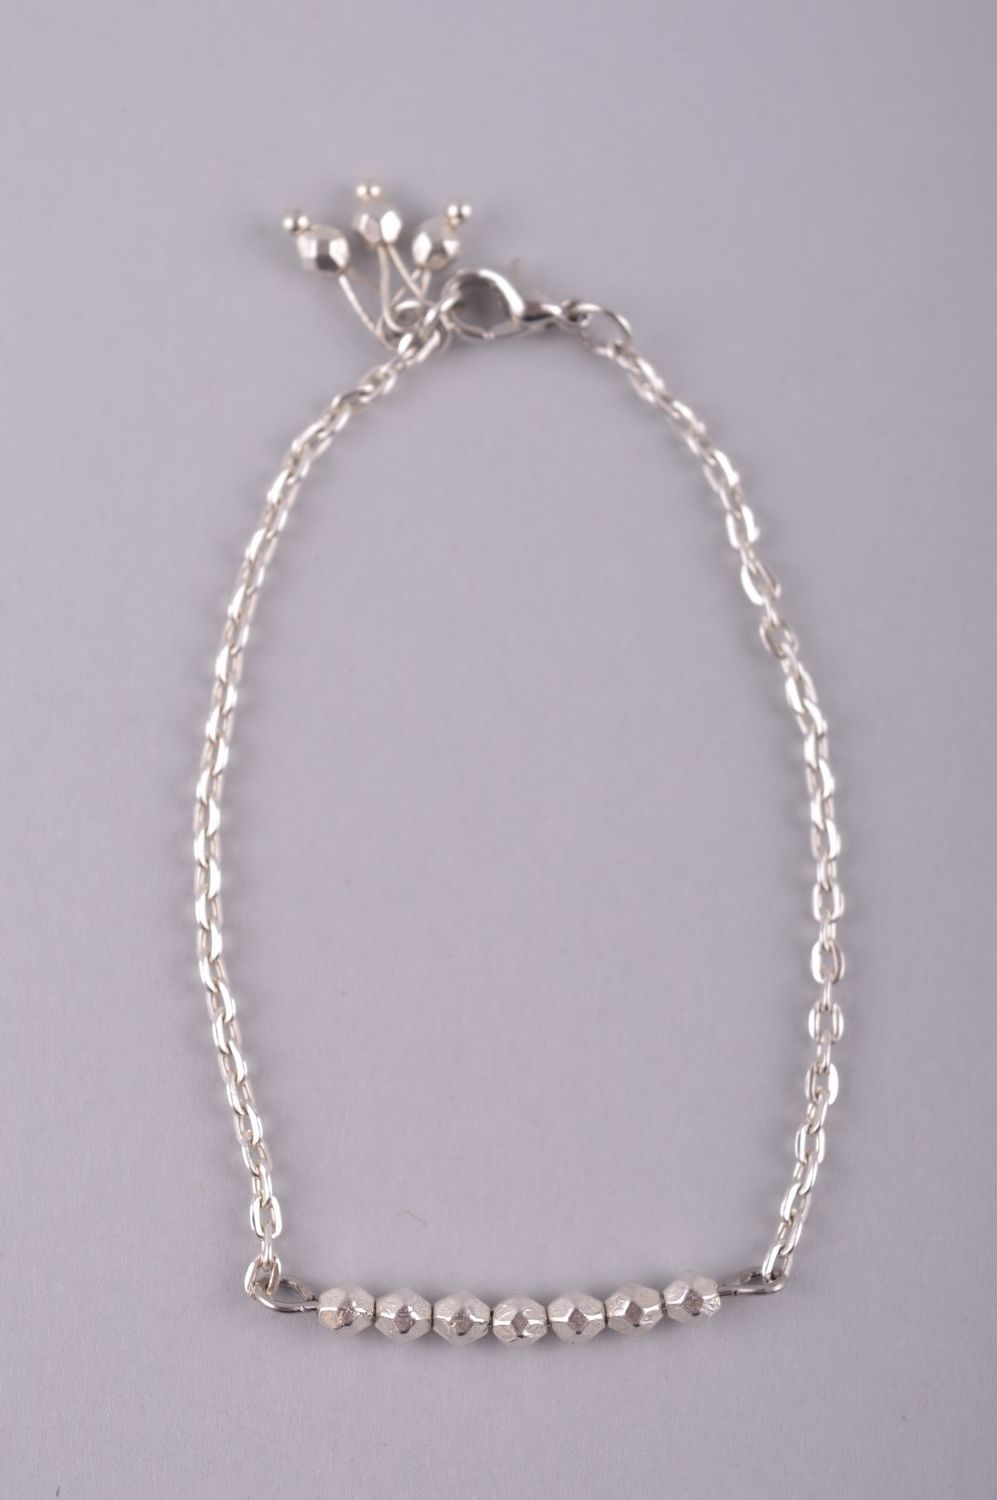 Handmade bracelet chain bracelet designer jewelry fashion accessories cool gifts photo 2